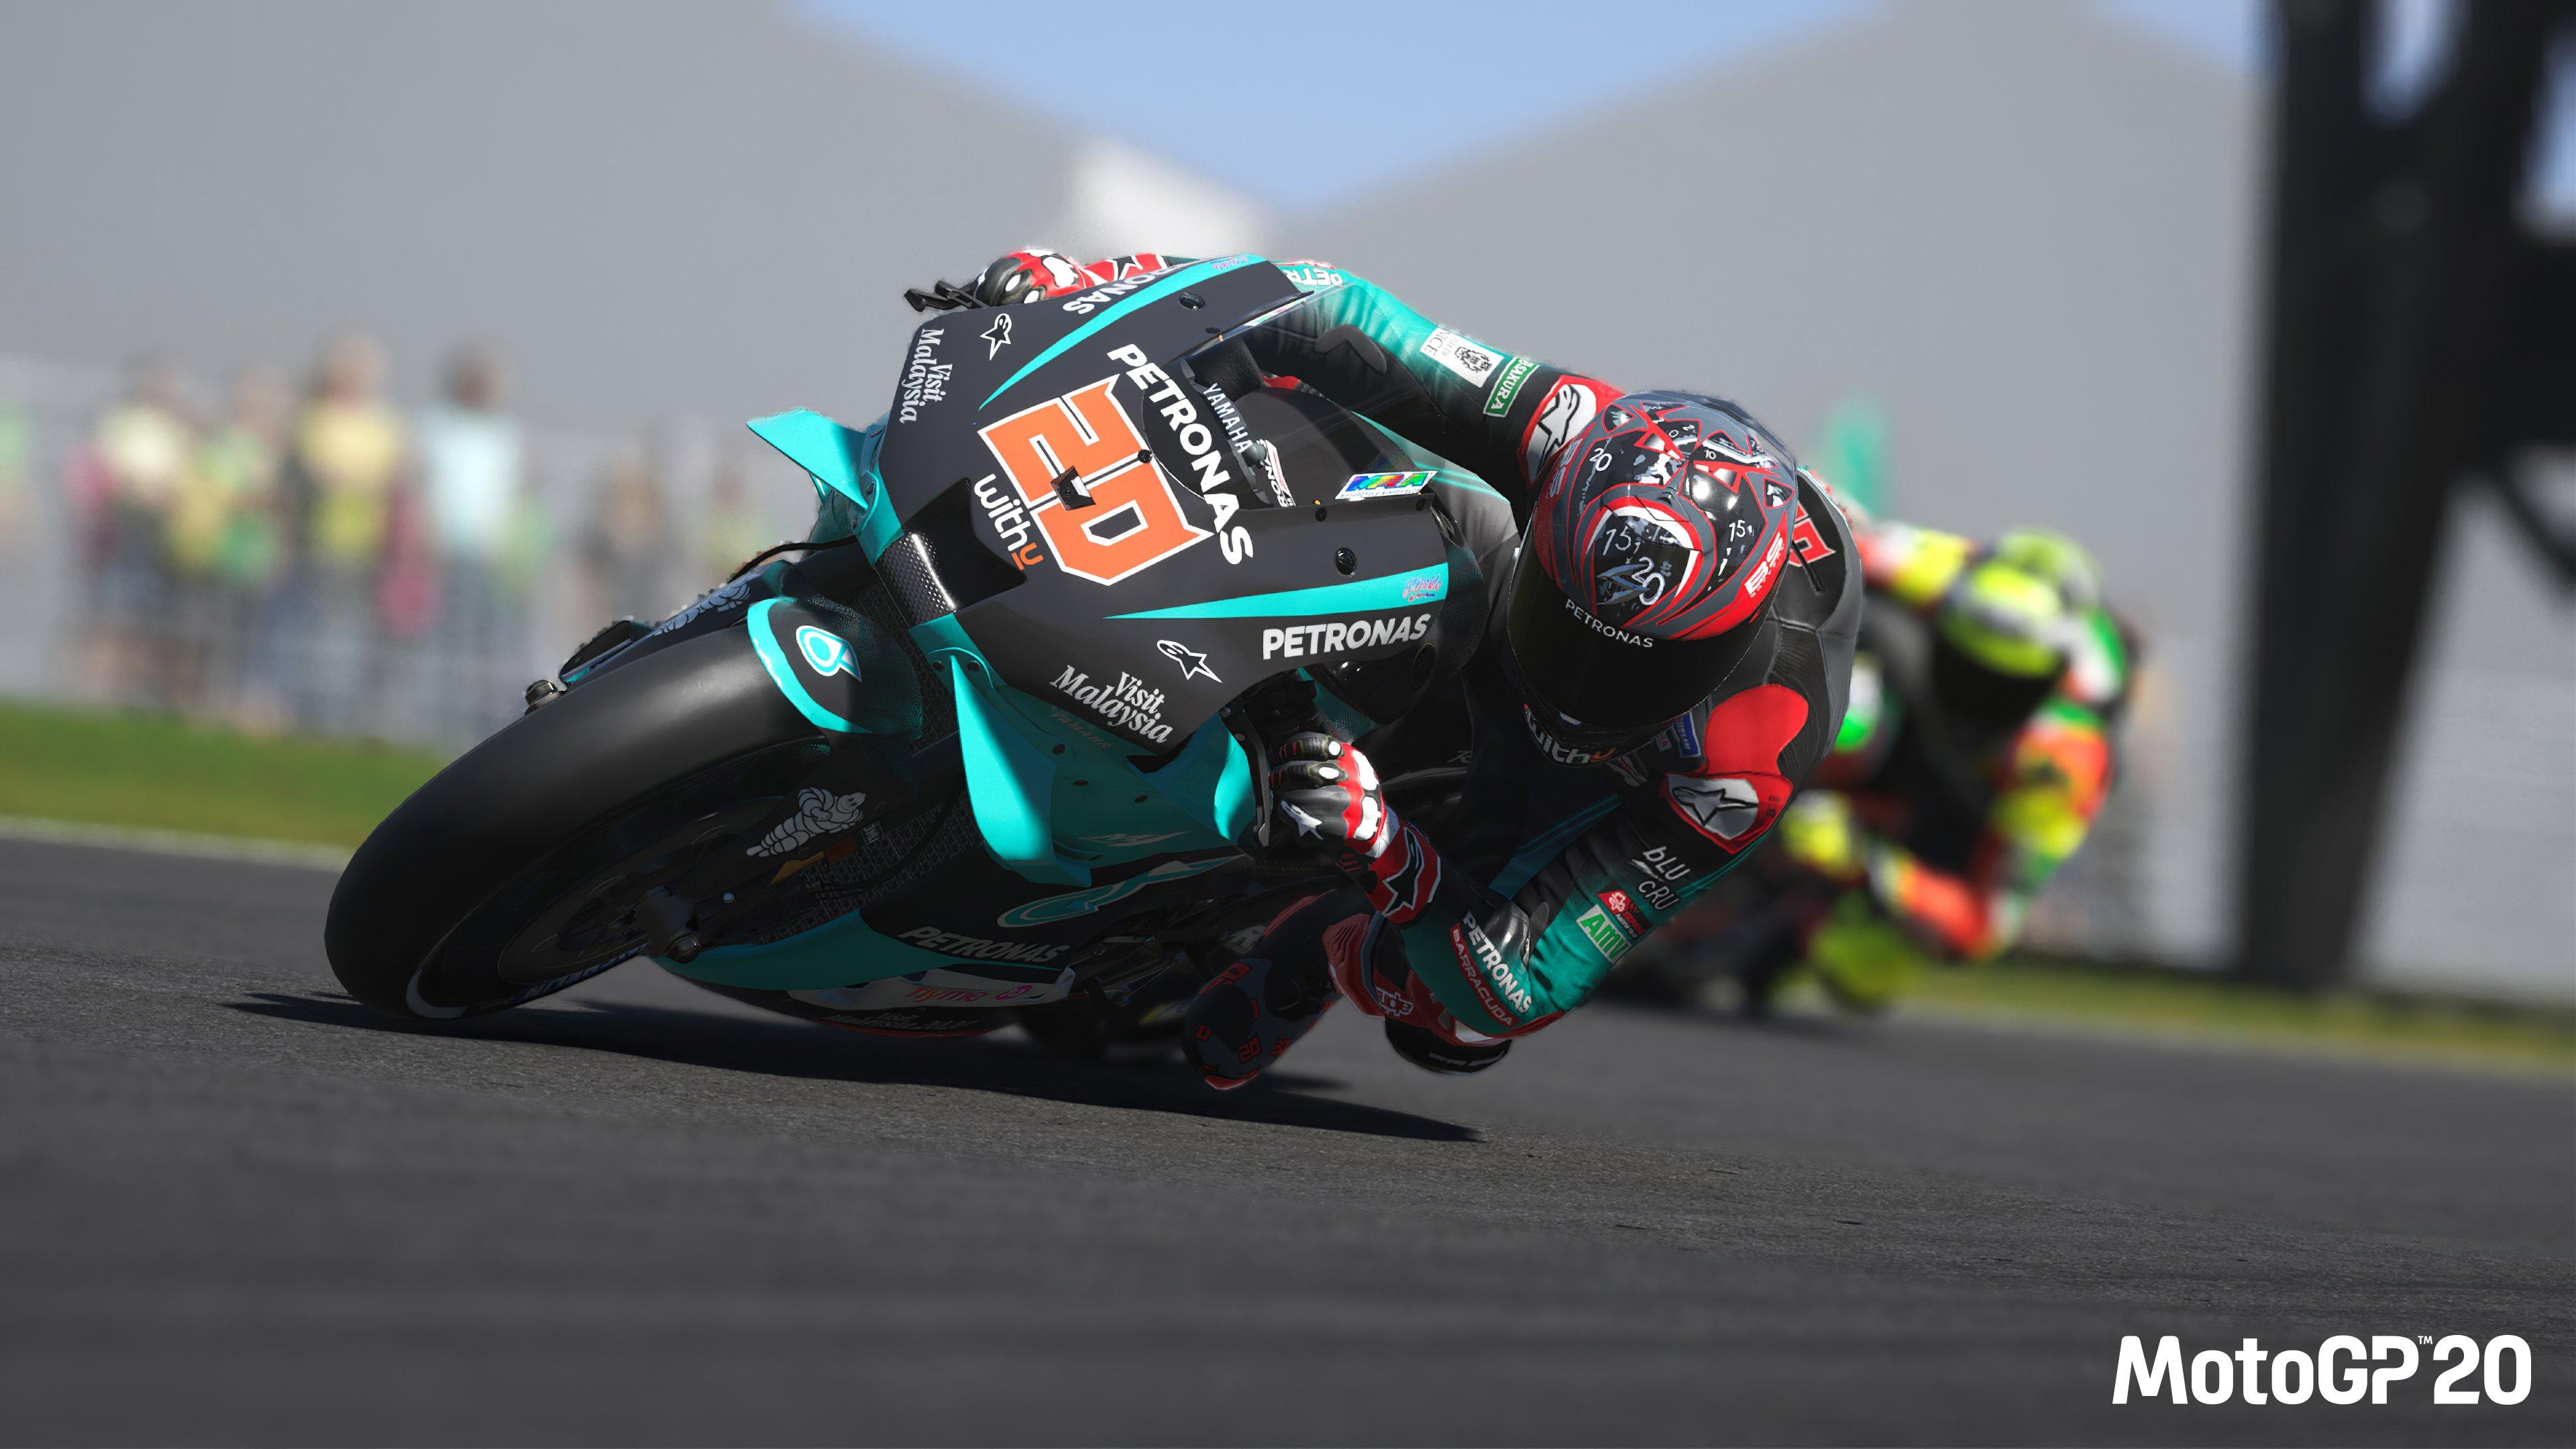 MotoGP 20 Xbox One Mídia Digital - RIOS VARIEDADES